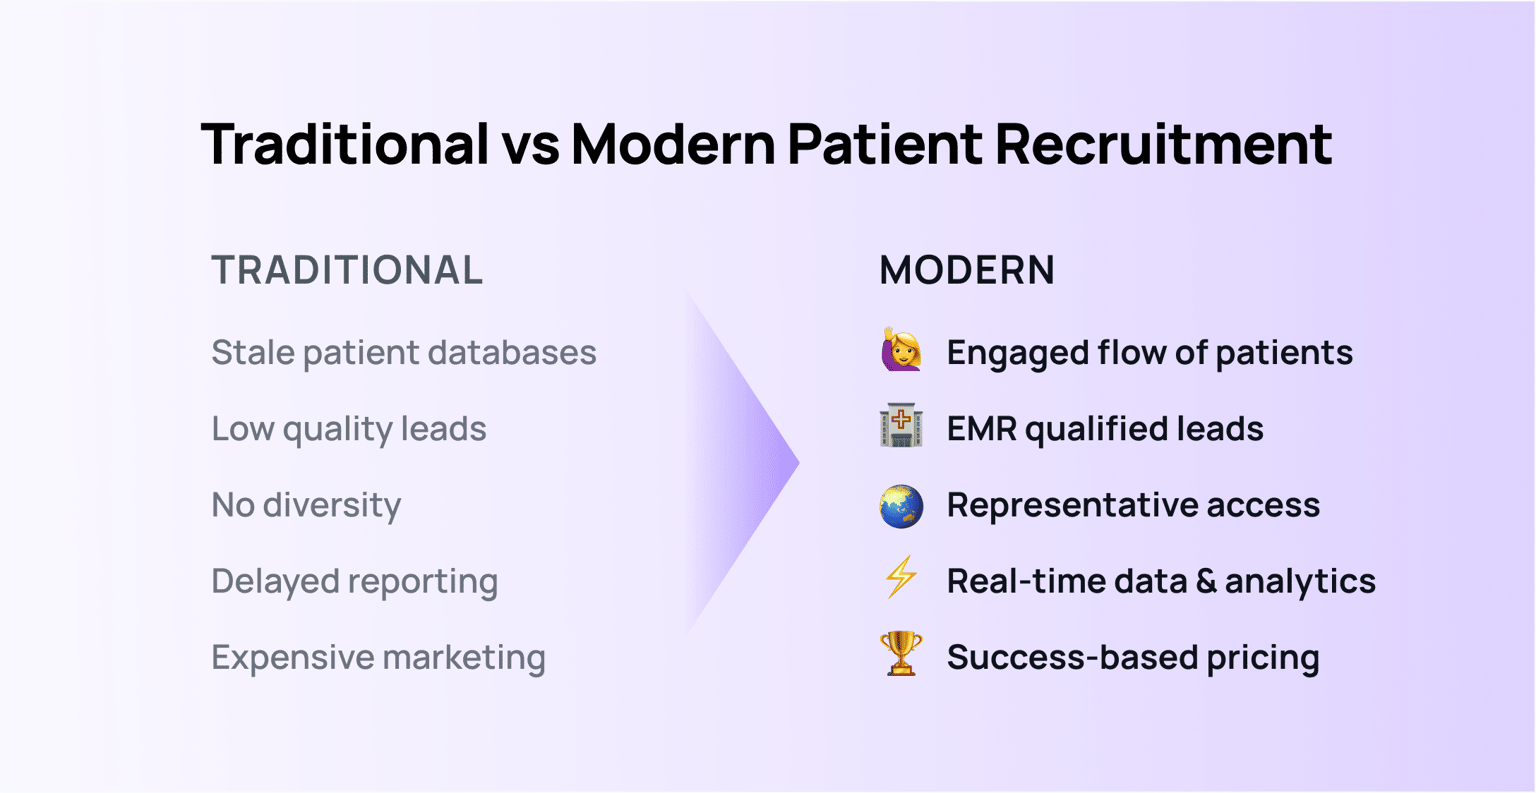 Traditional versus modern recruitment comparison